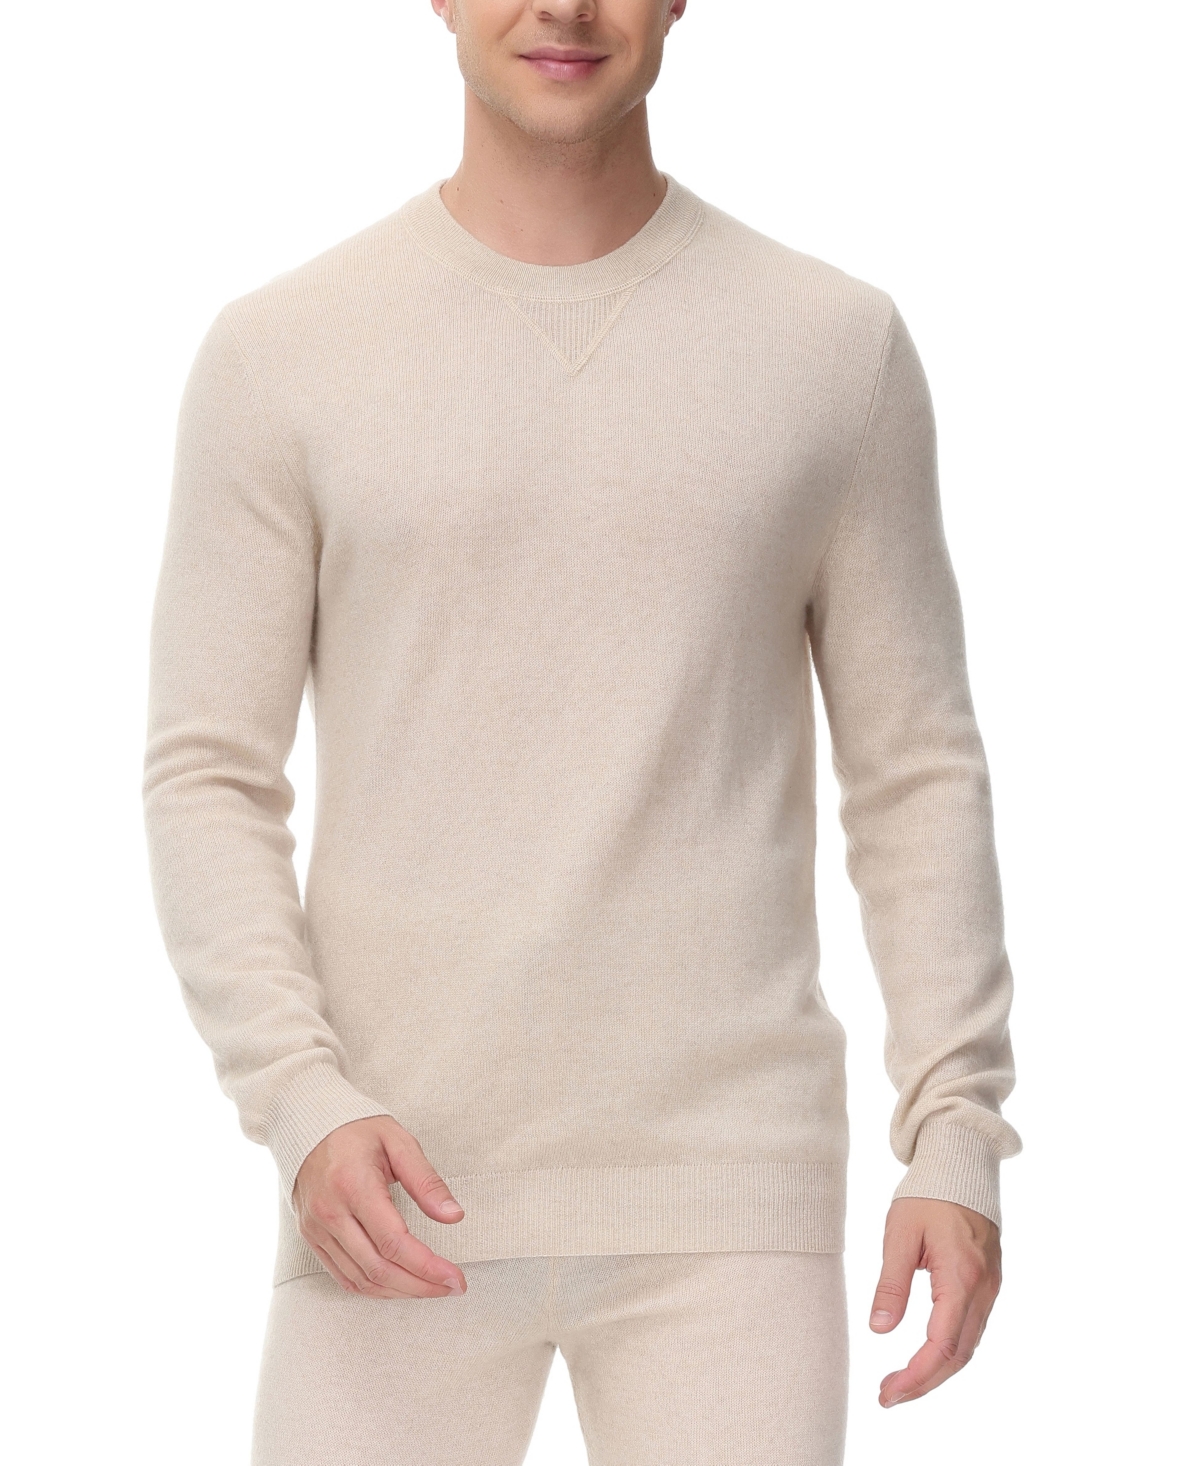 Men's Cashmere Lounge Sweatshirt - Tan Heather